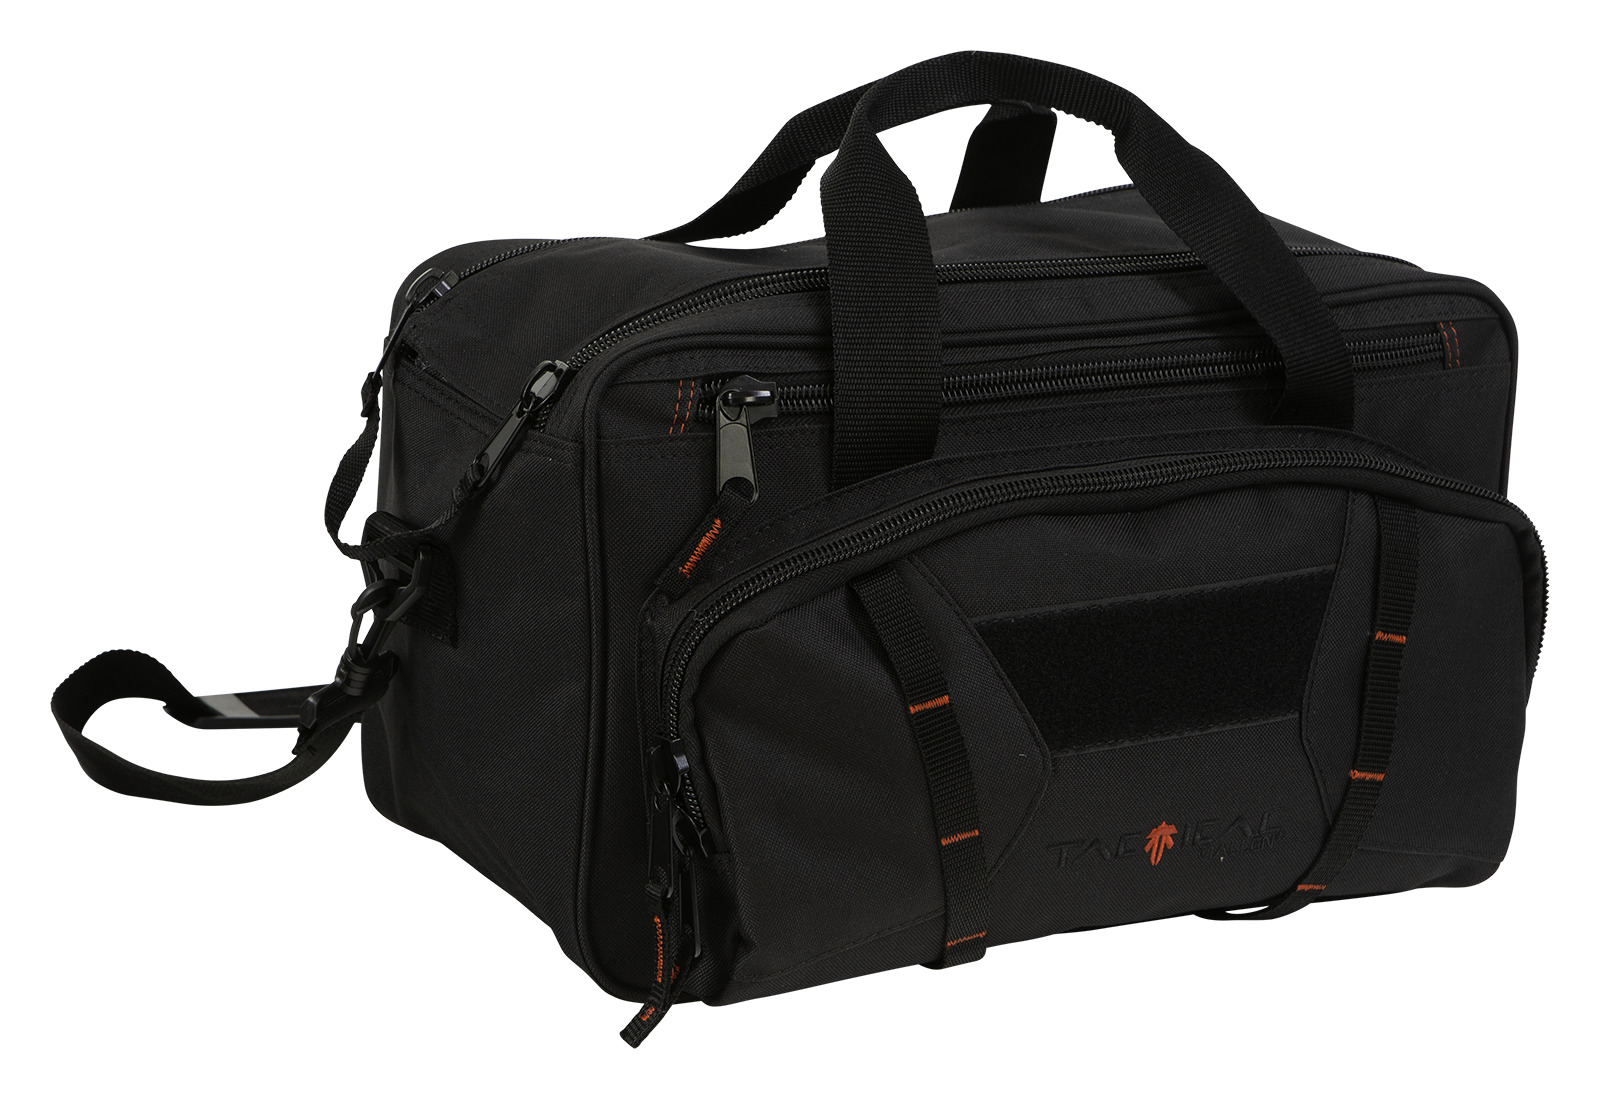 Tac-Six Tactical Sporter Range Bag, Black/Red : Ausable River